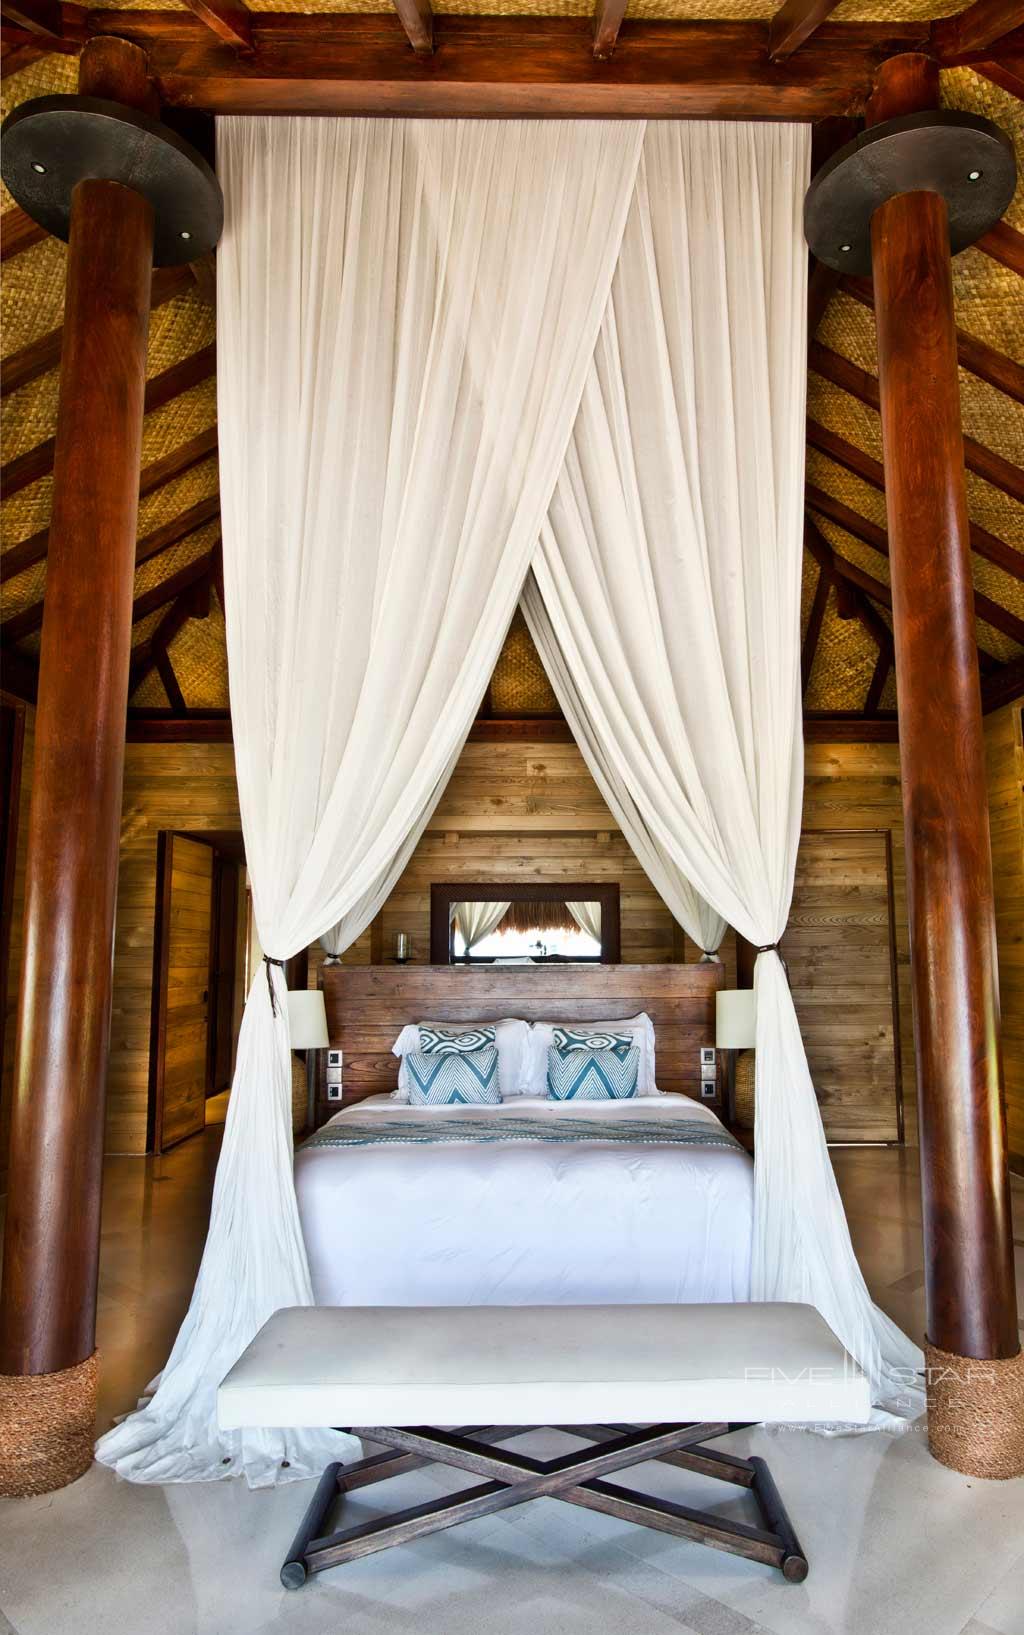 Marangga Guest Room at Nihi Sumba Island formerly Nihiwatu Resort, Sumba, Indonesia